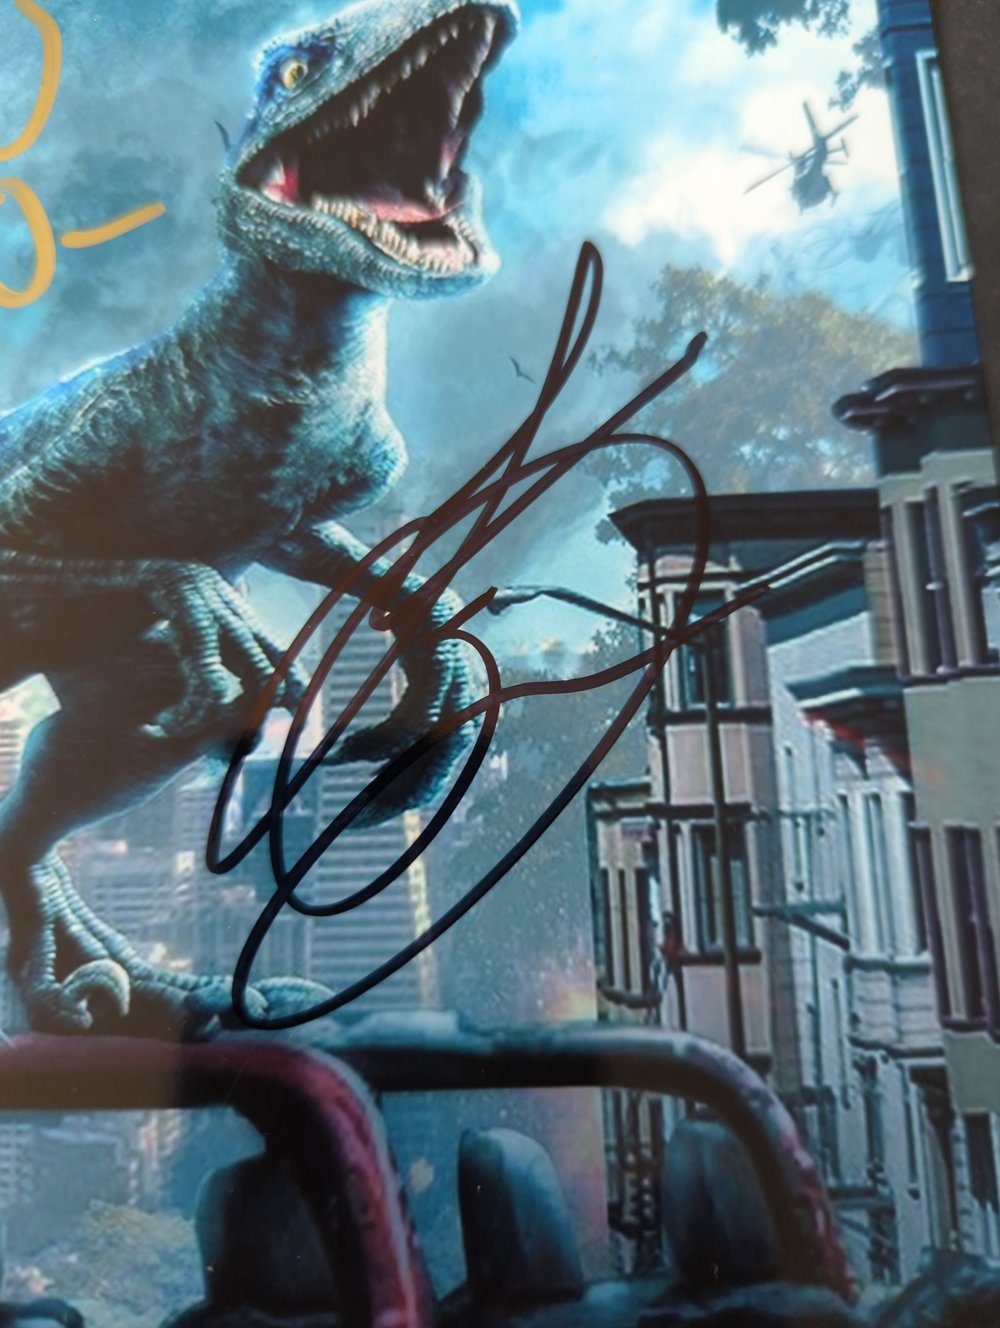 Jurassic World Dominion Cast Signed 12x8 Photo